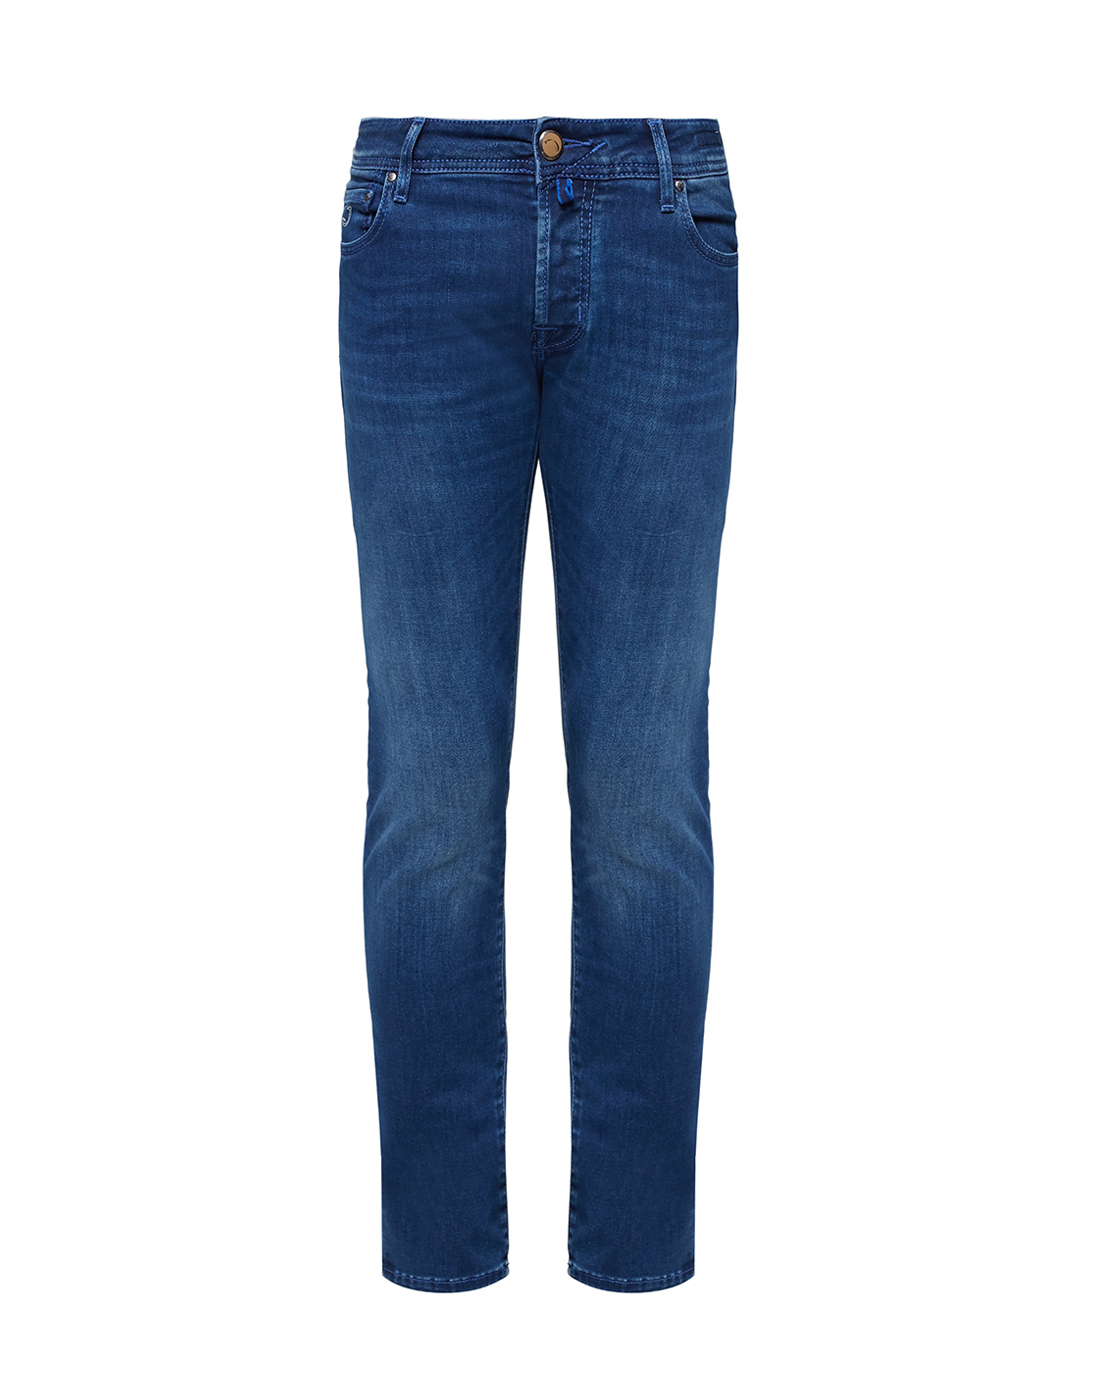 Мужские синие джинсы Jacob Cohen SJ622 COMF-2061-W3-1